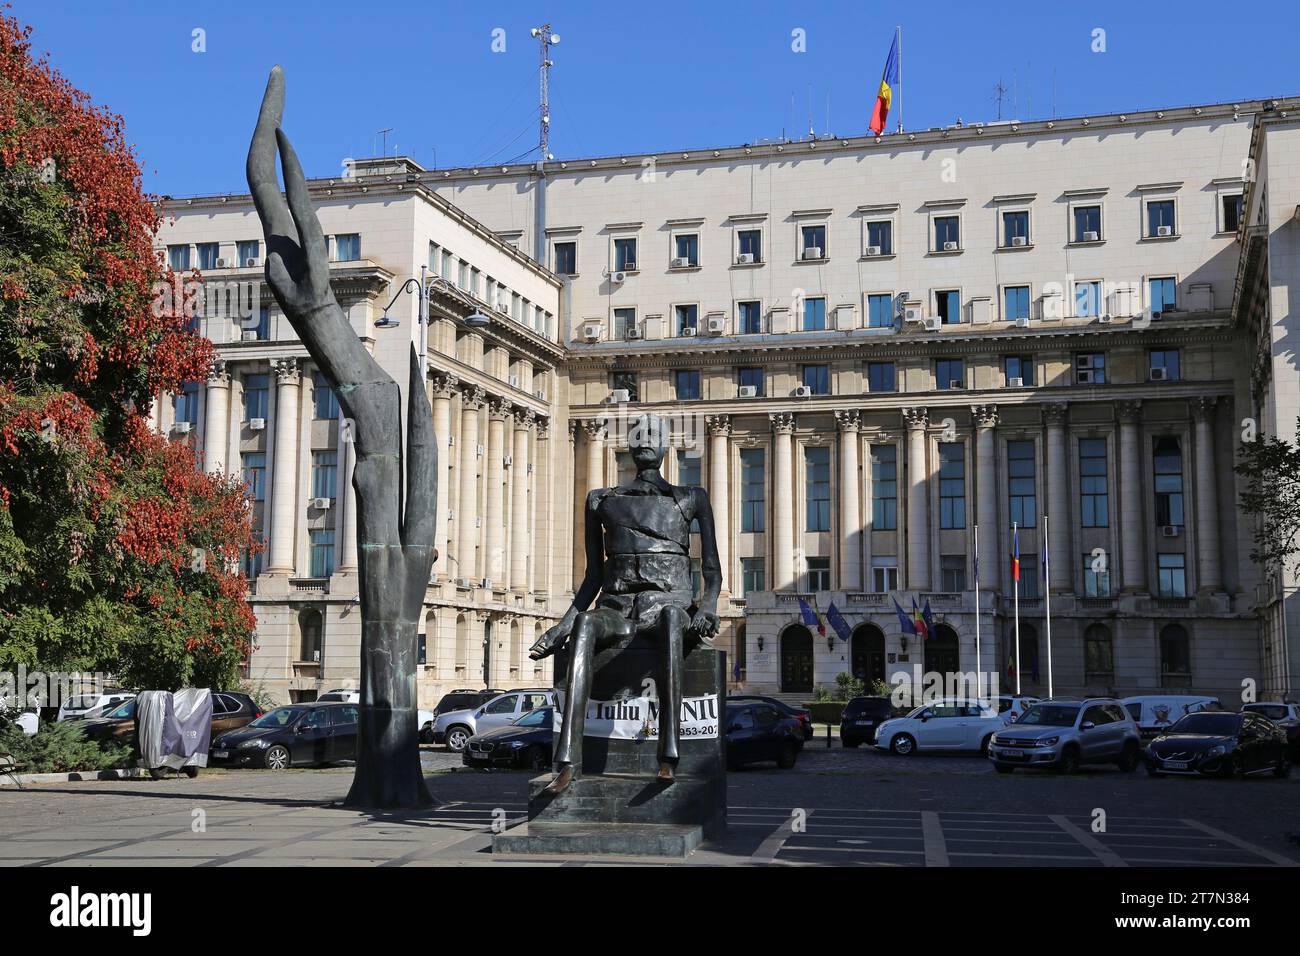 Iuliu Maniu (1873-1953) sculpture, Piața Revoluției (Revolution Square), Old Town, Historic Centre, Bucharest, Romania, Europe Stock Photo